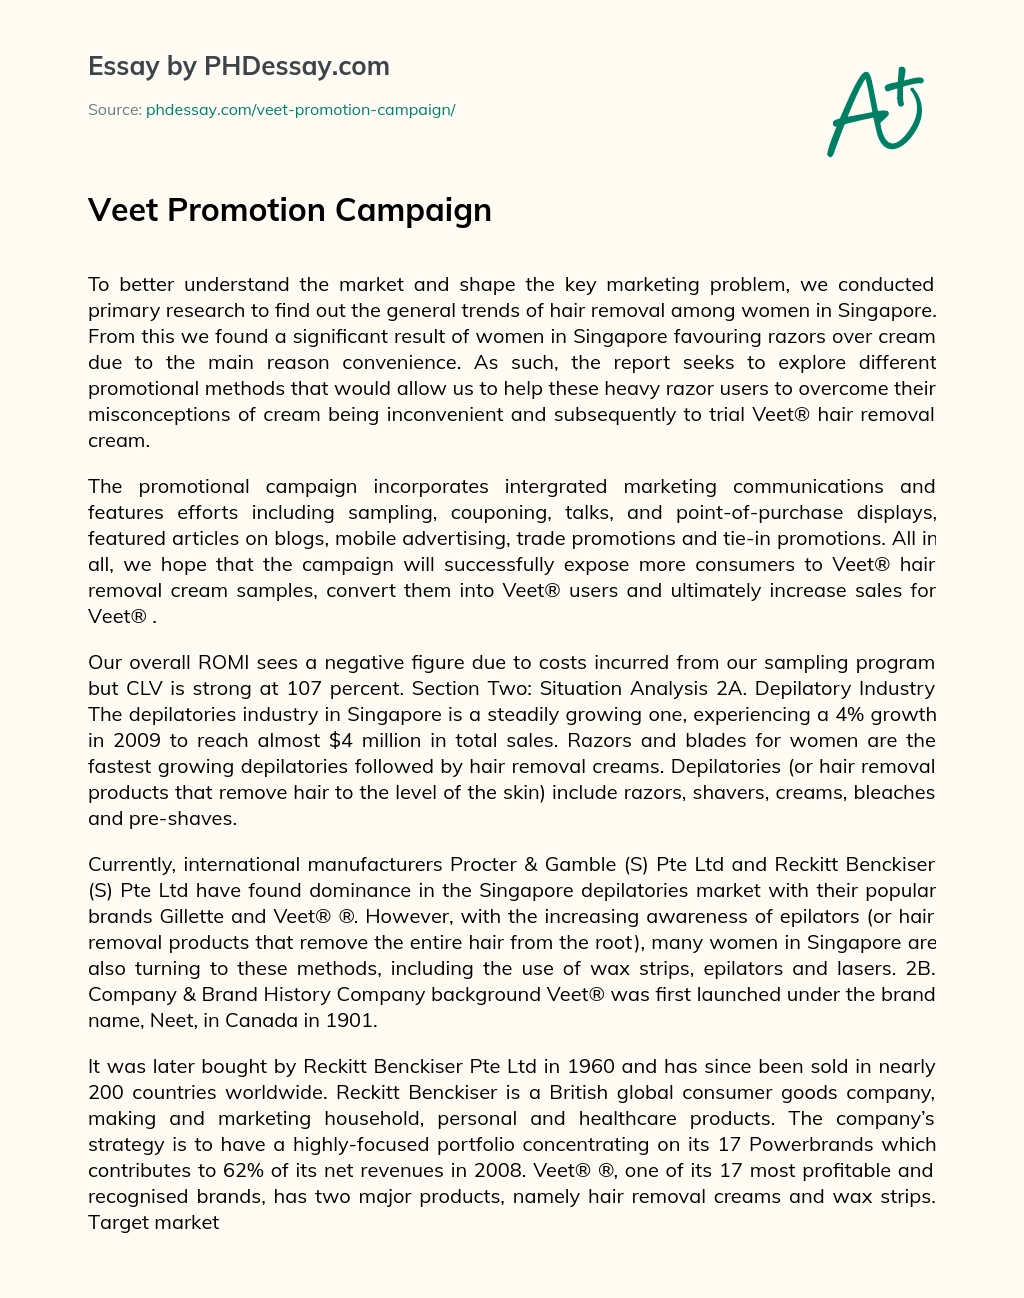 Veet Promotion Campaign essay